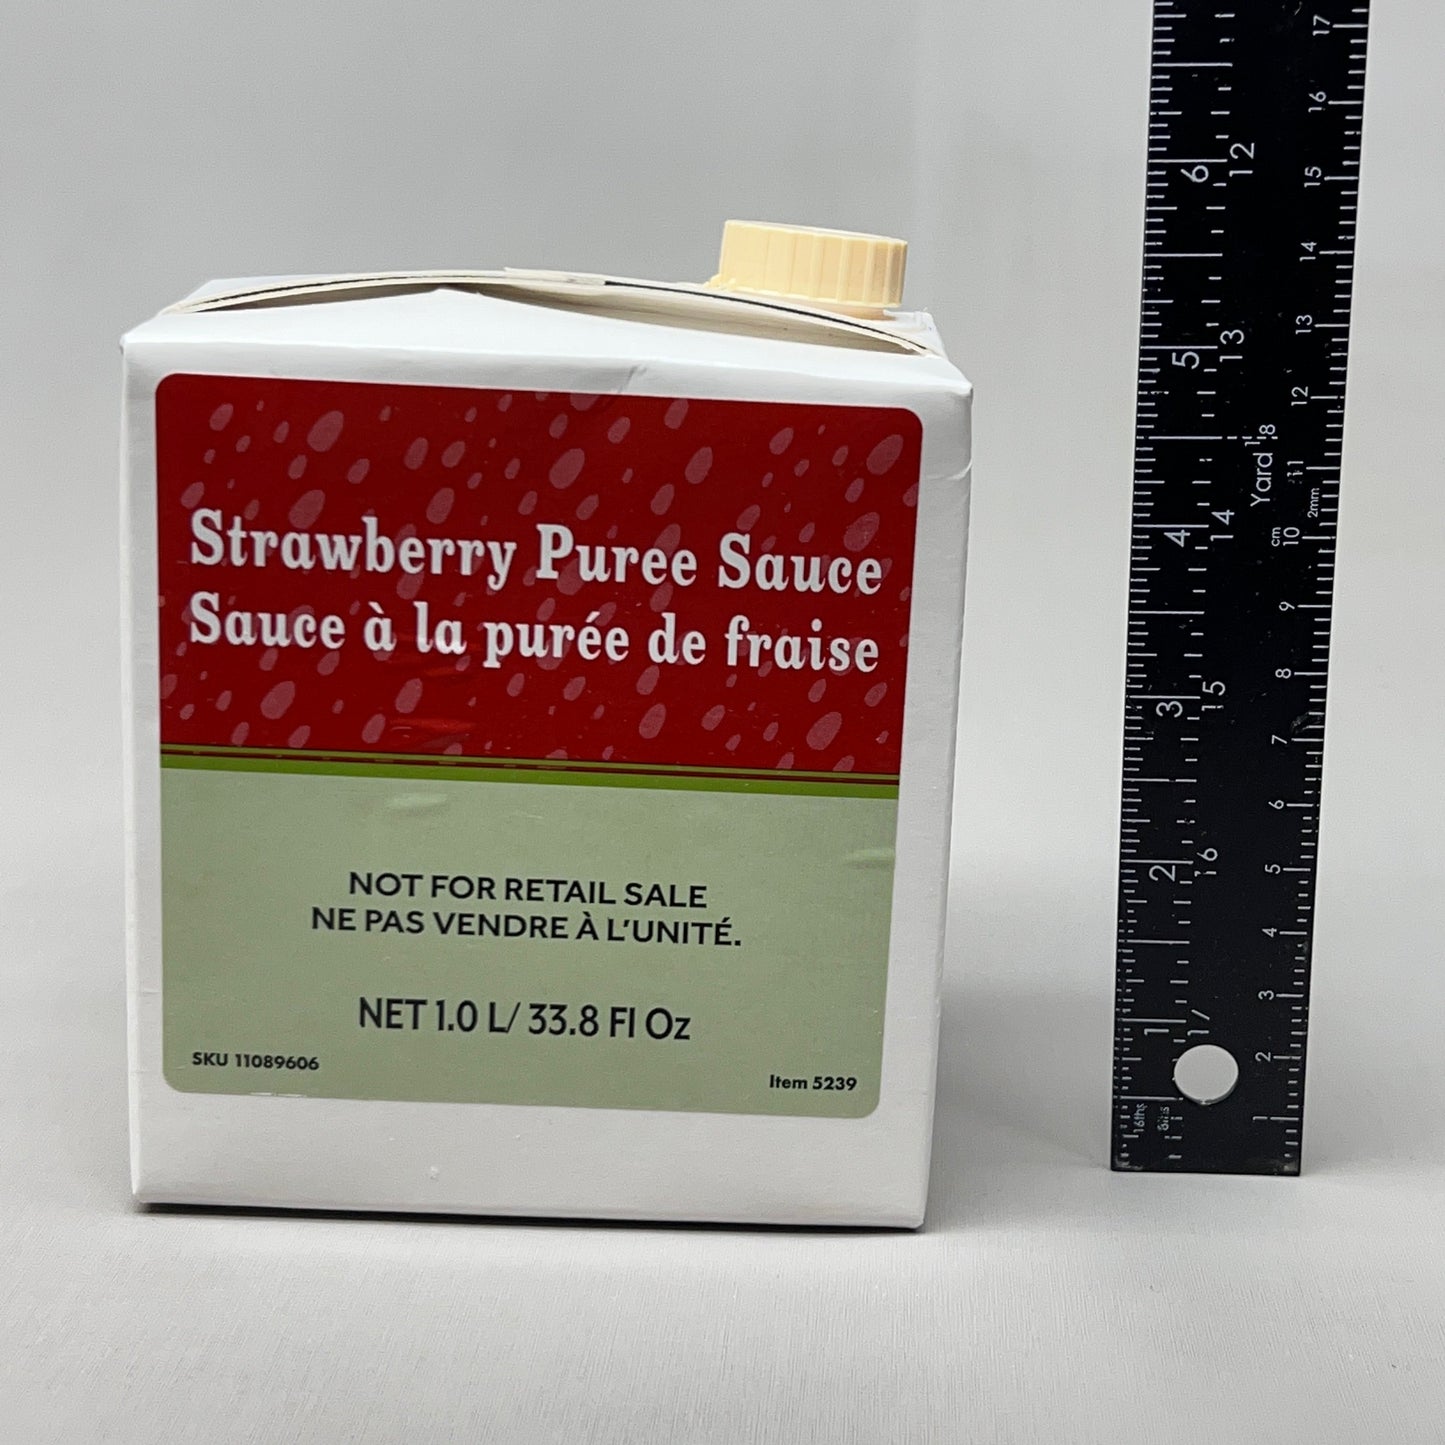 STARBUCKS (6 PACK) Strawberry Puree Sauce (33.8 Fl oz/bottle) 04/24 AS-IS